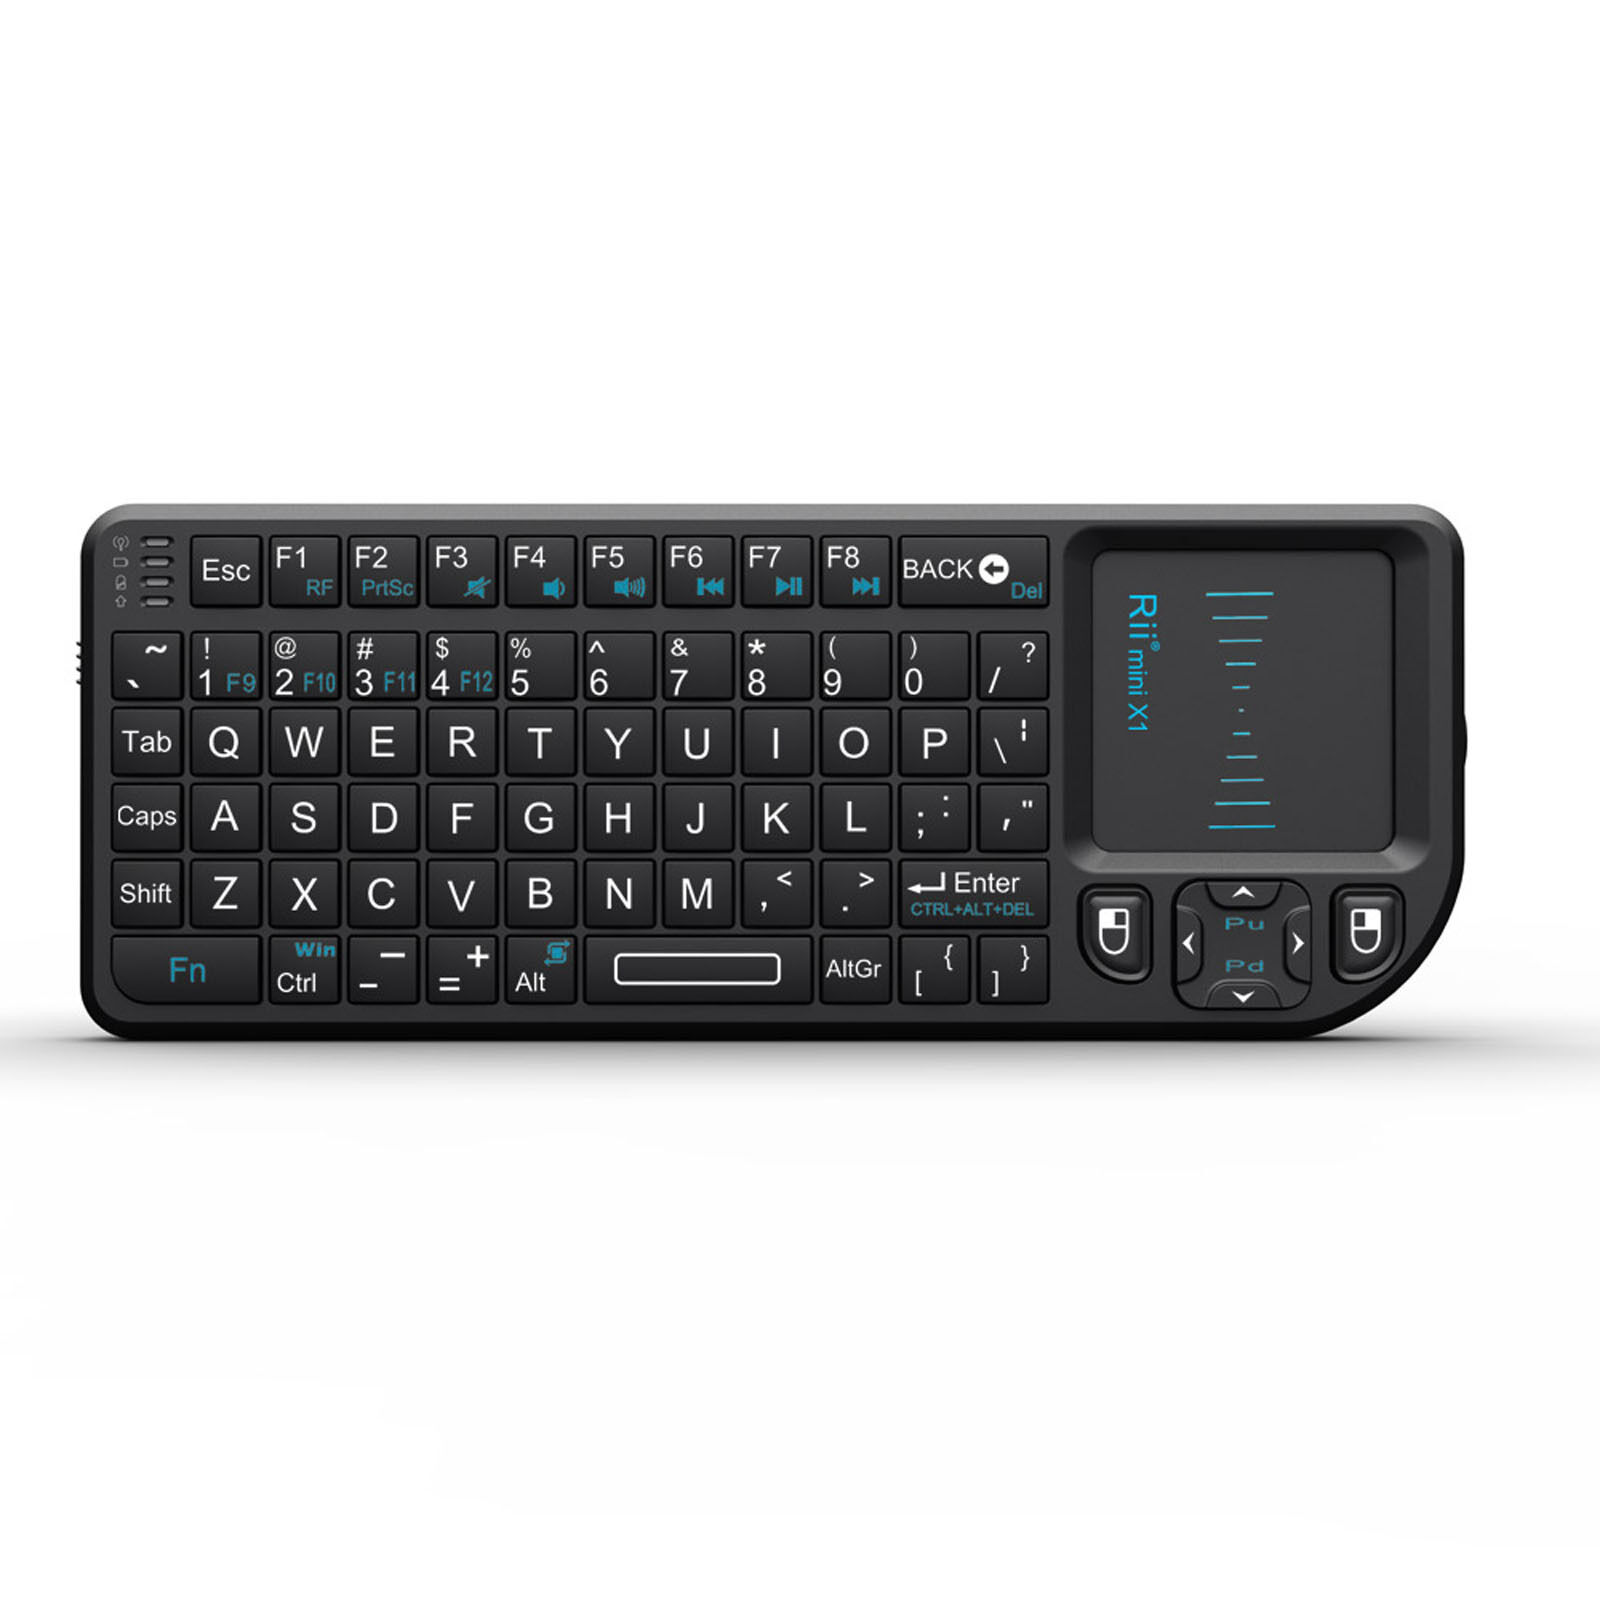 Rii Mini X1 RF Mini Wireless Keyboard Touchpad for PC Smart TV Android TV Box